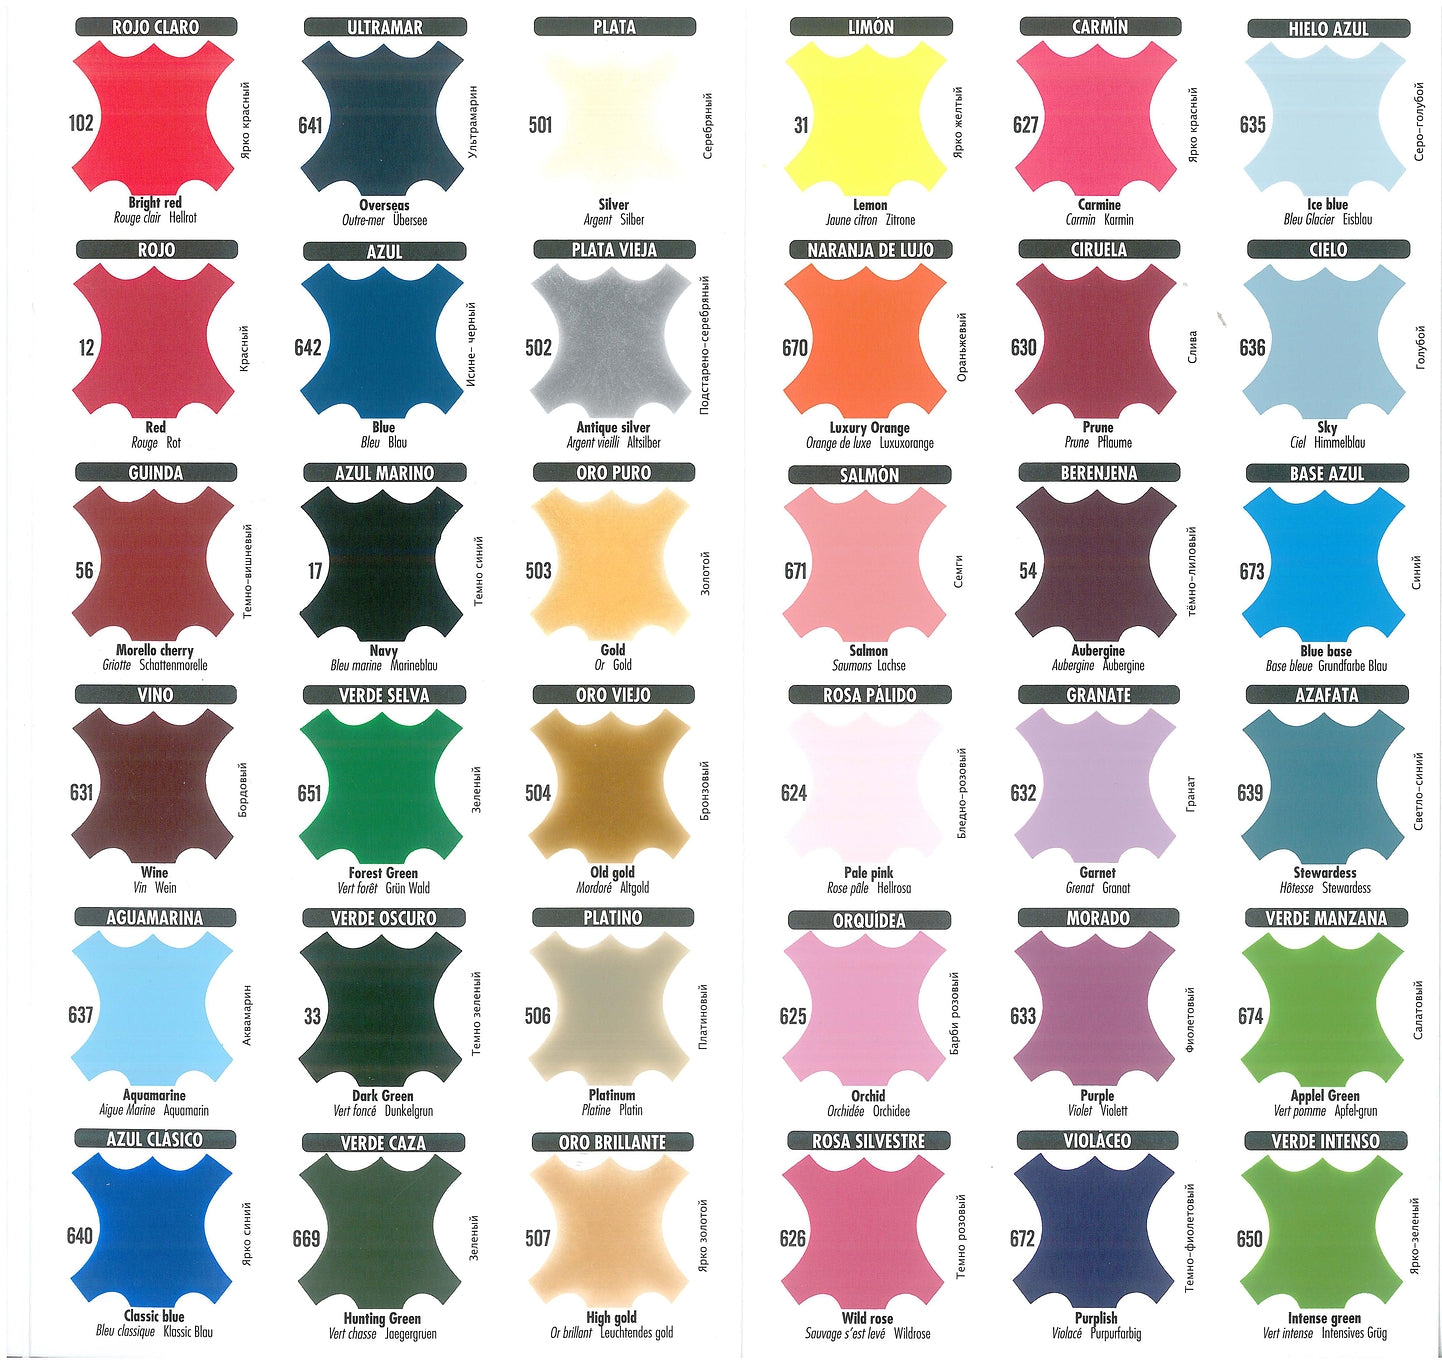 Leather Dye Colour Chart